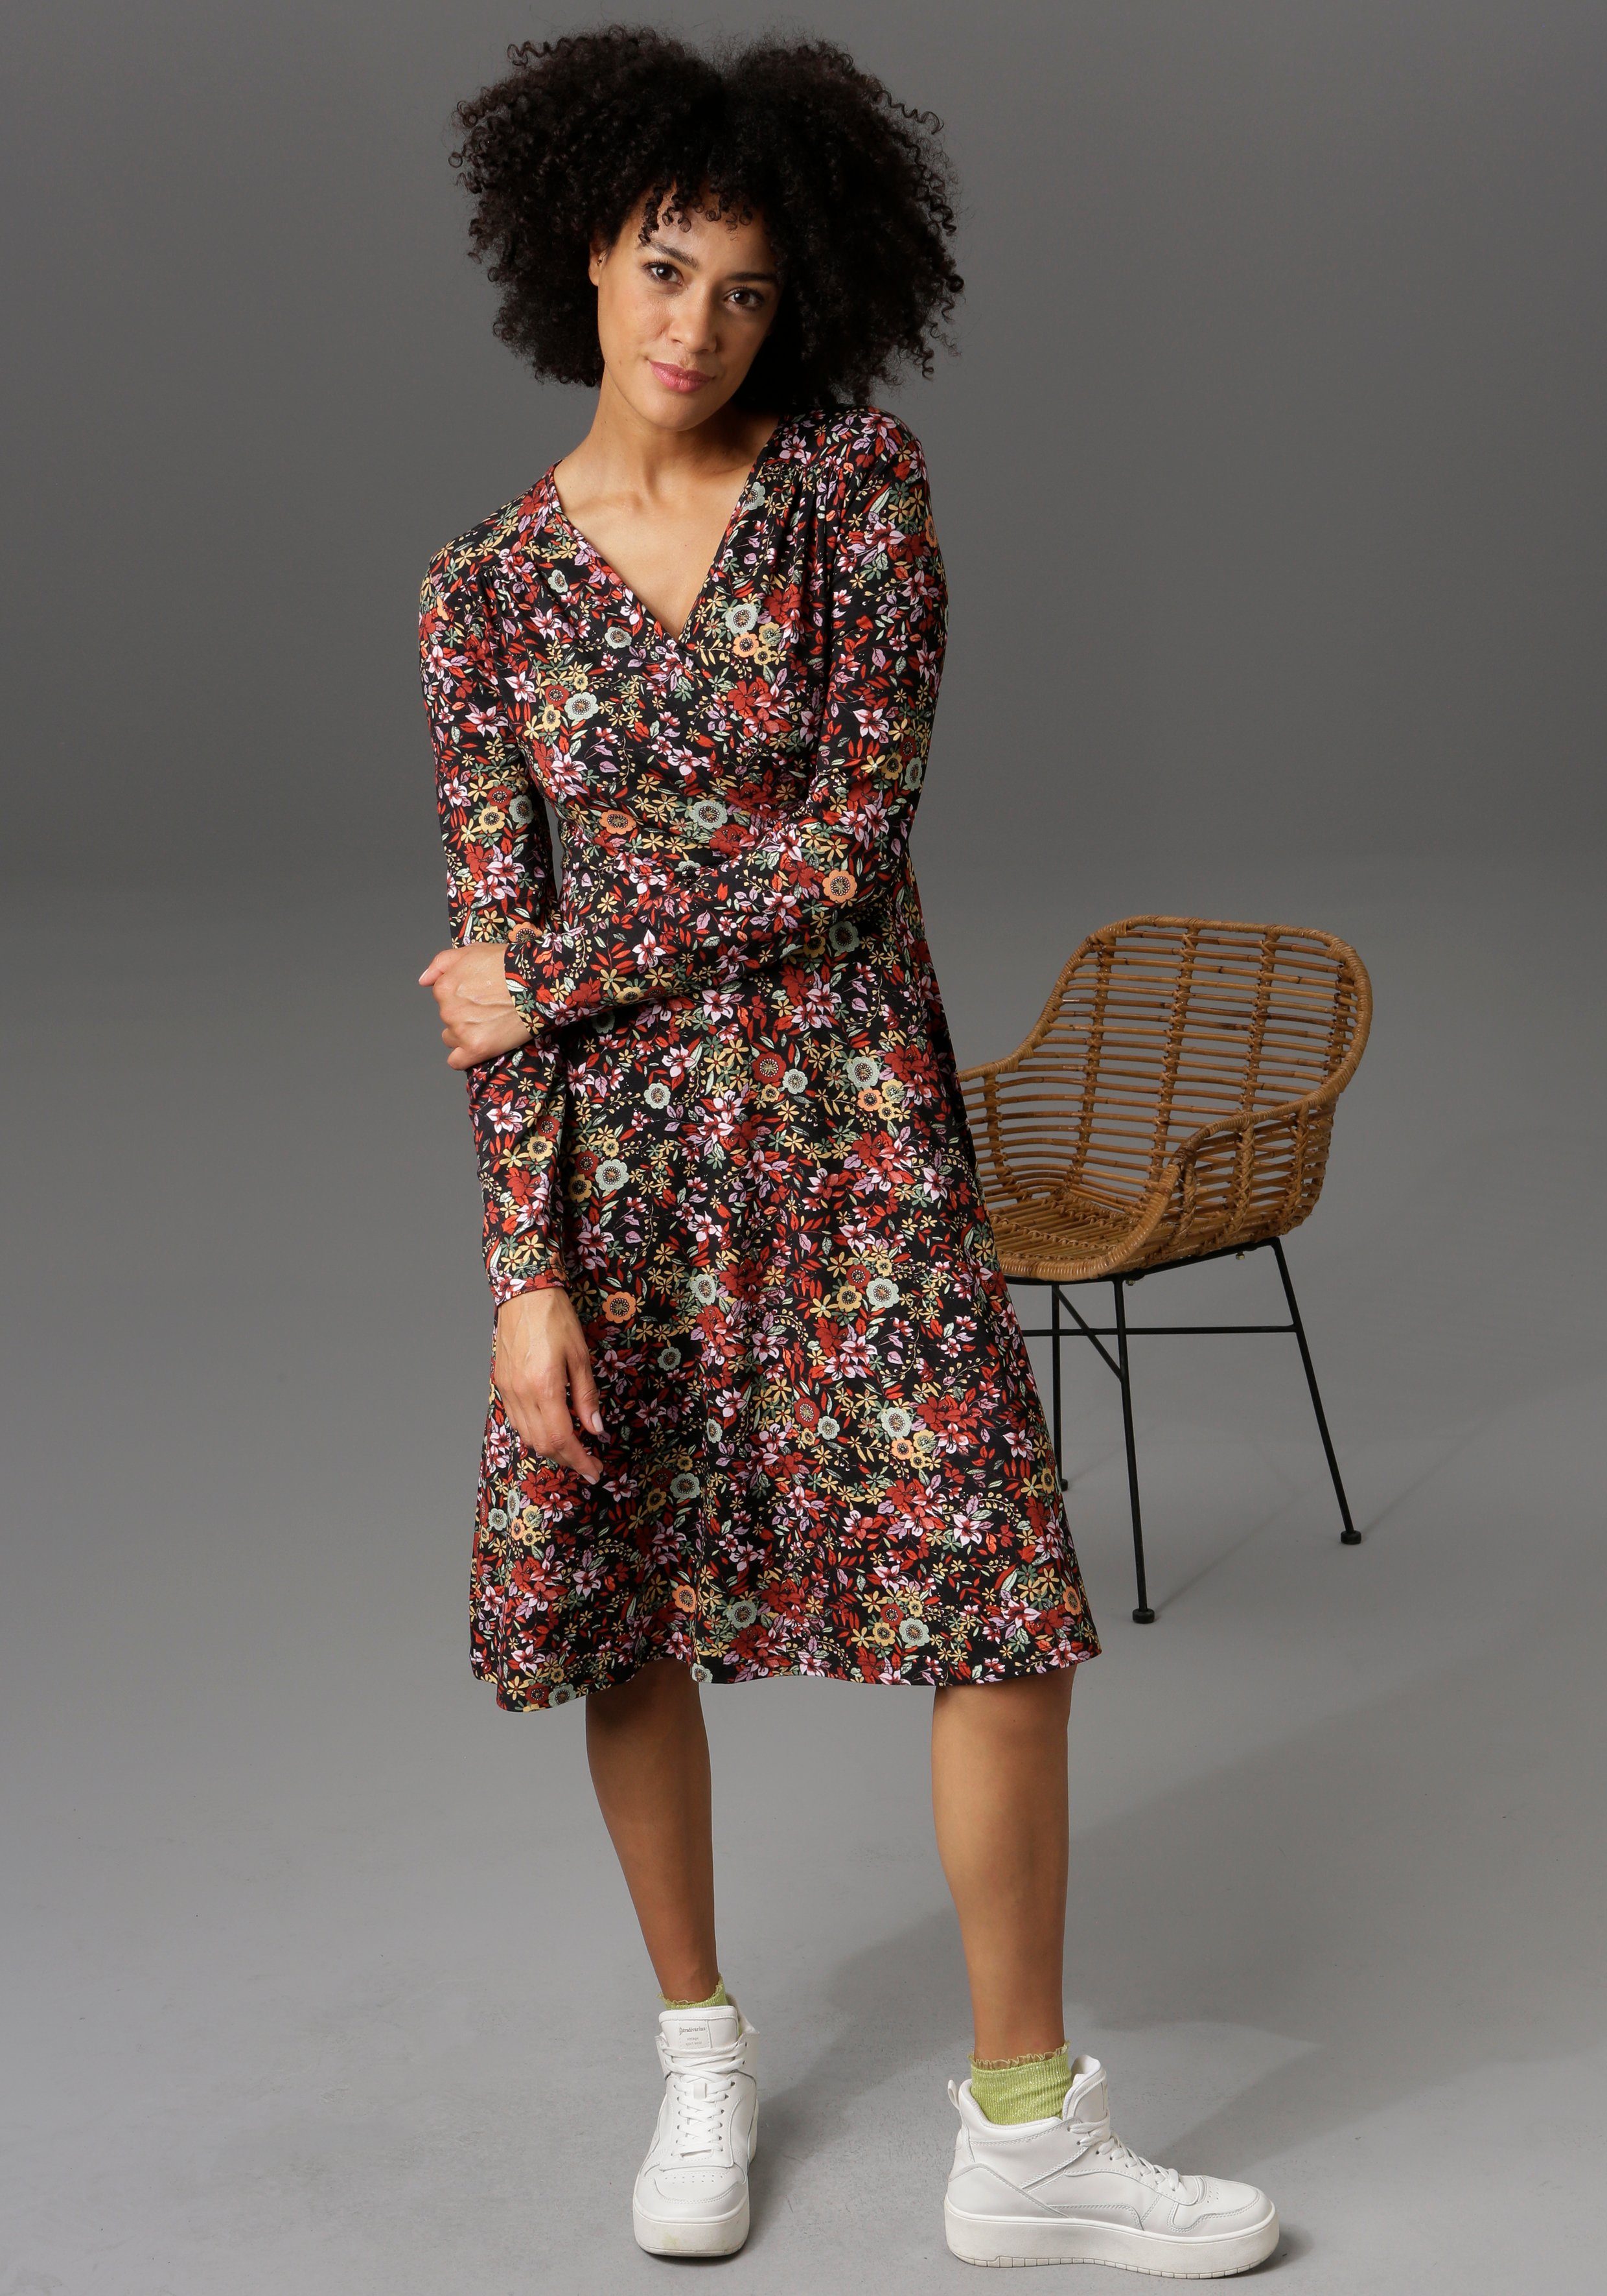 CASUAL Damenkleid Wickel-Optik, Aniston Jerseykleid Blumendruck mit in farbenfrohen